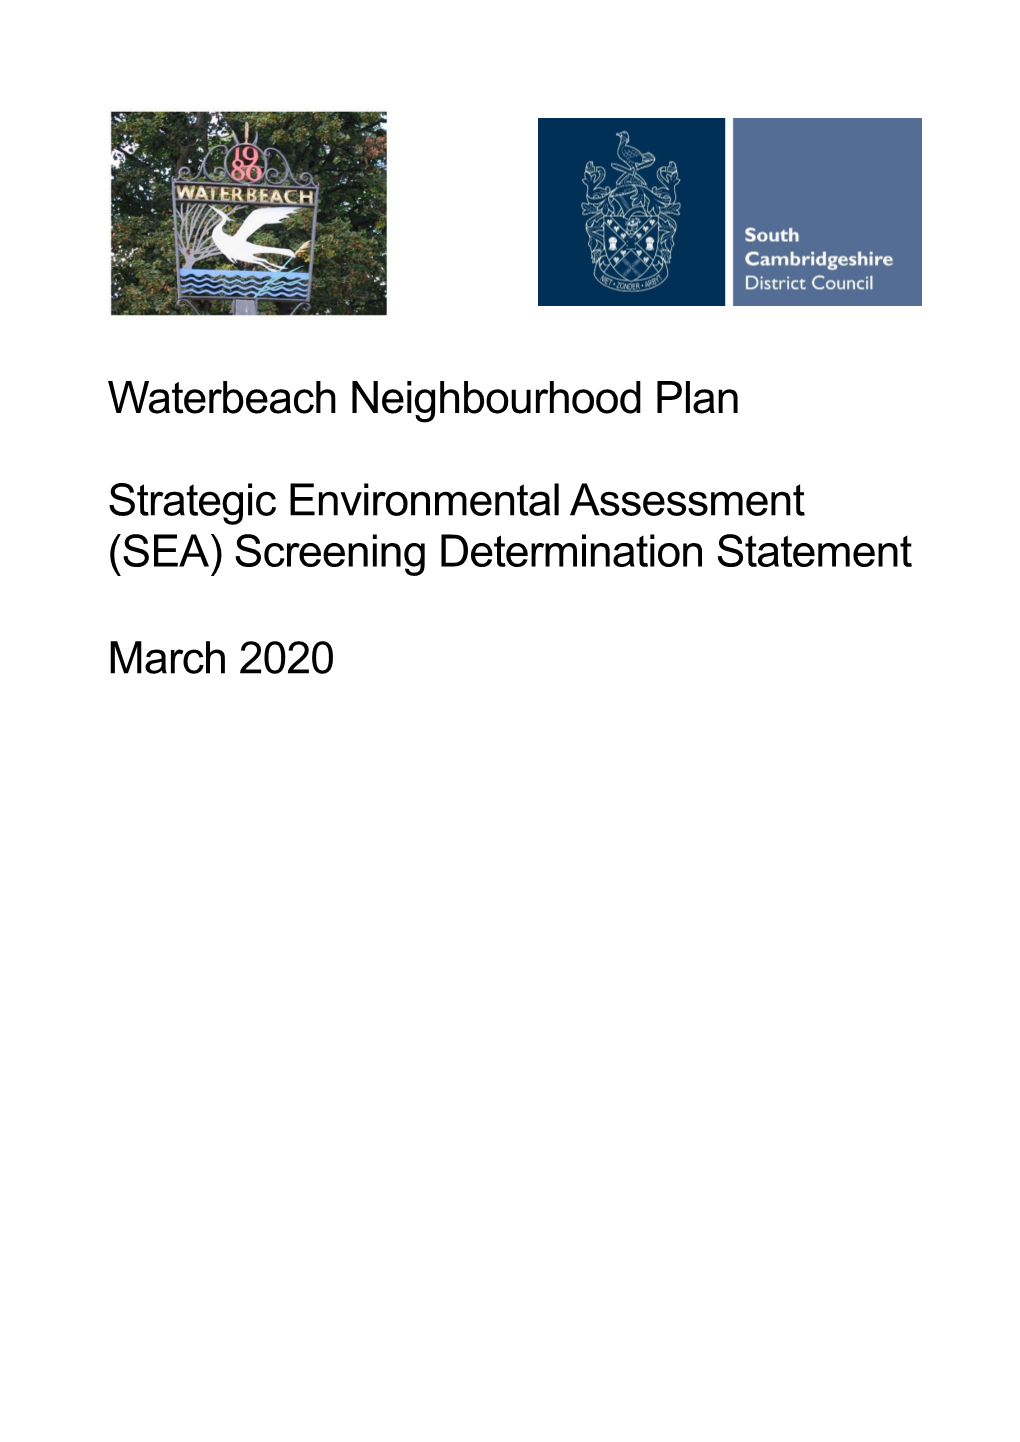 Strategic Environmental Assessment Screening Determination Statement